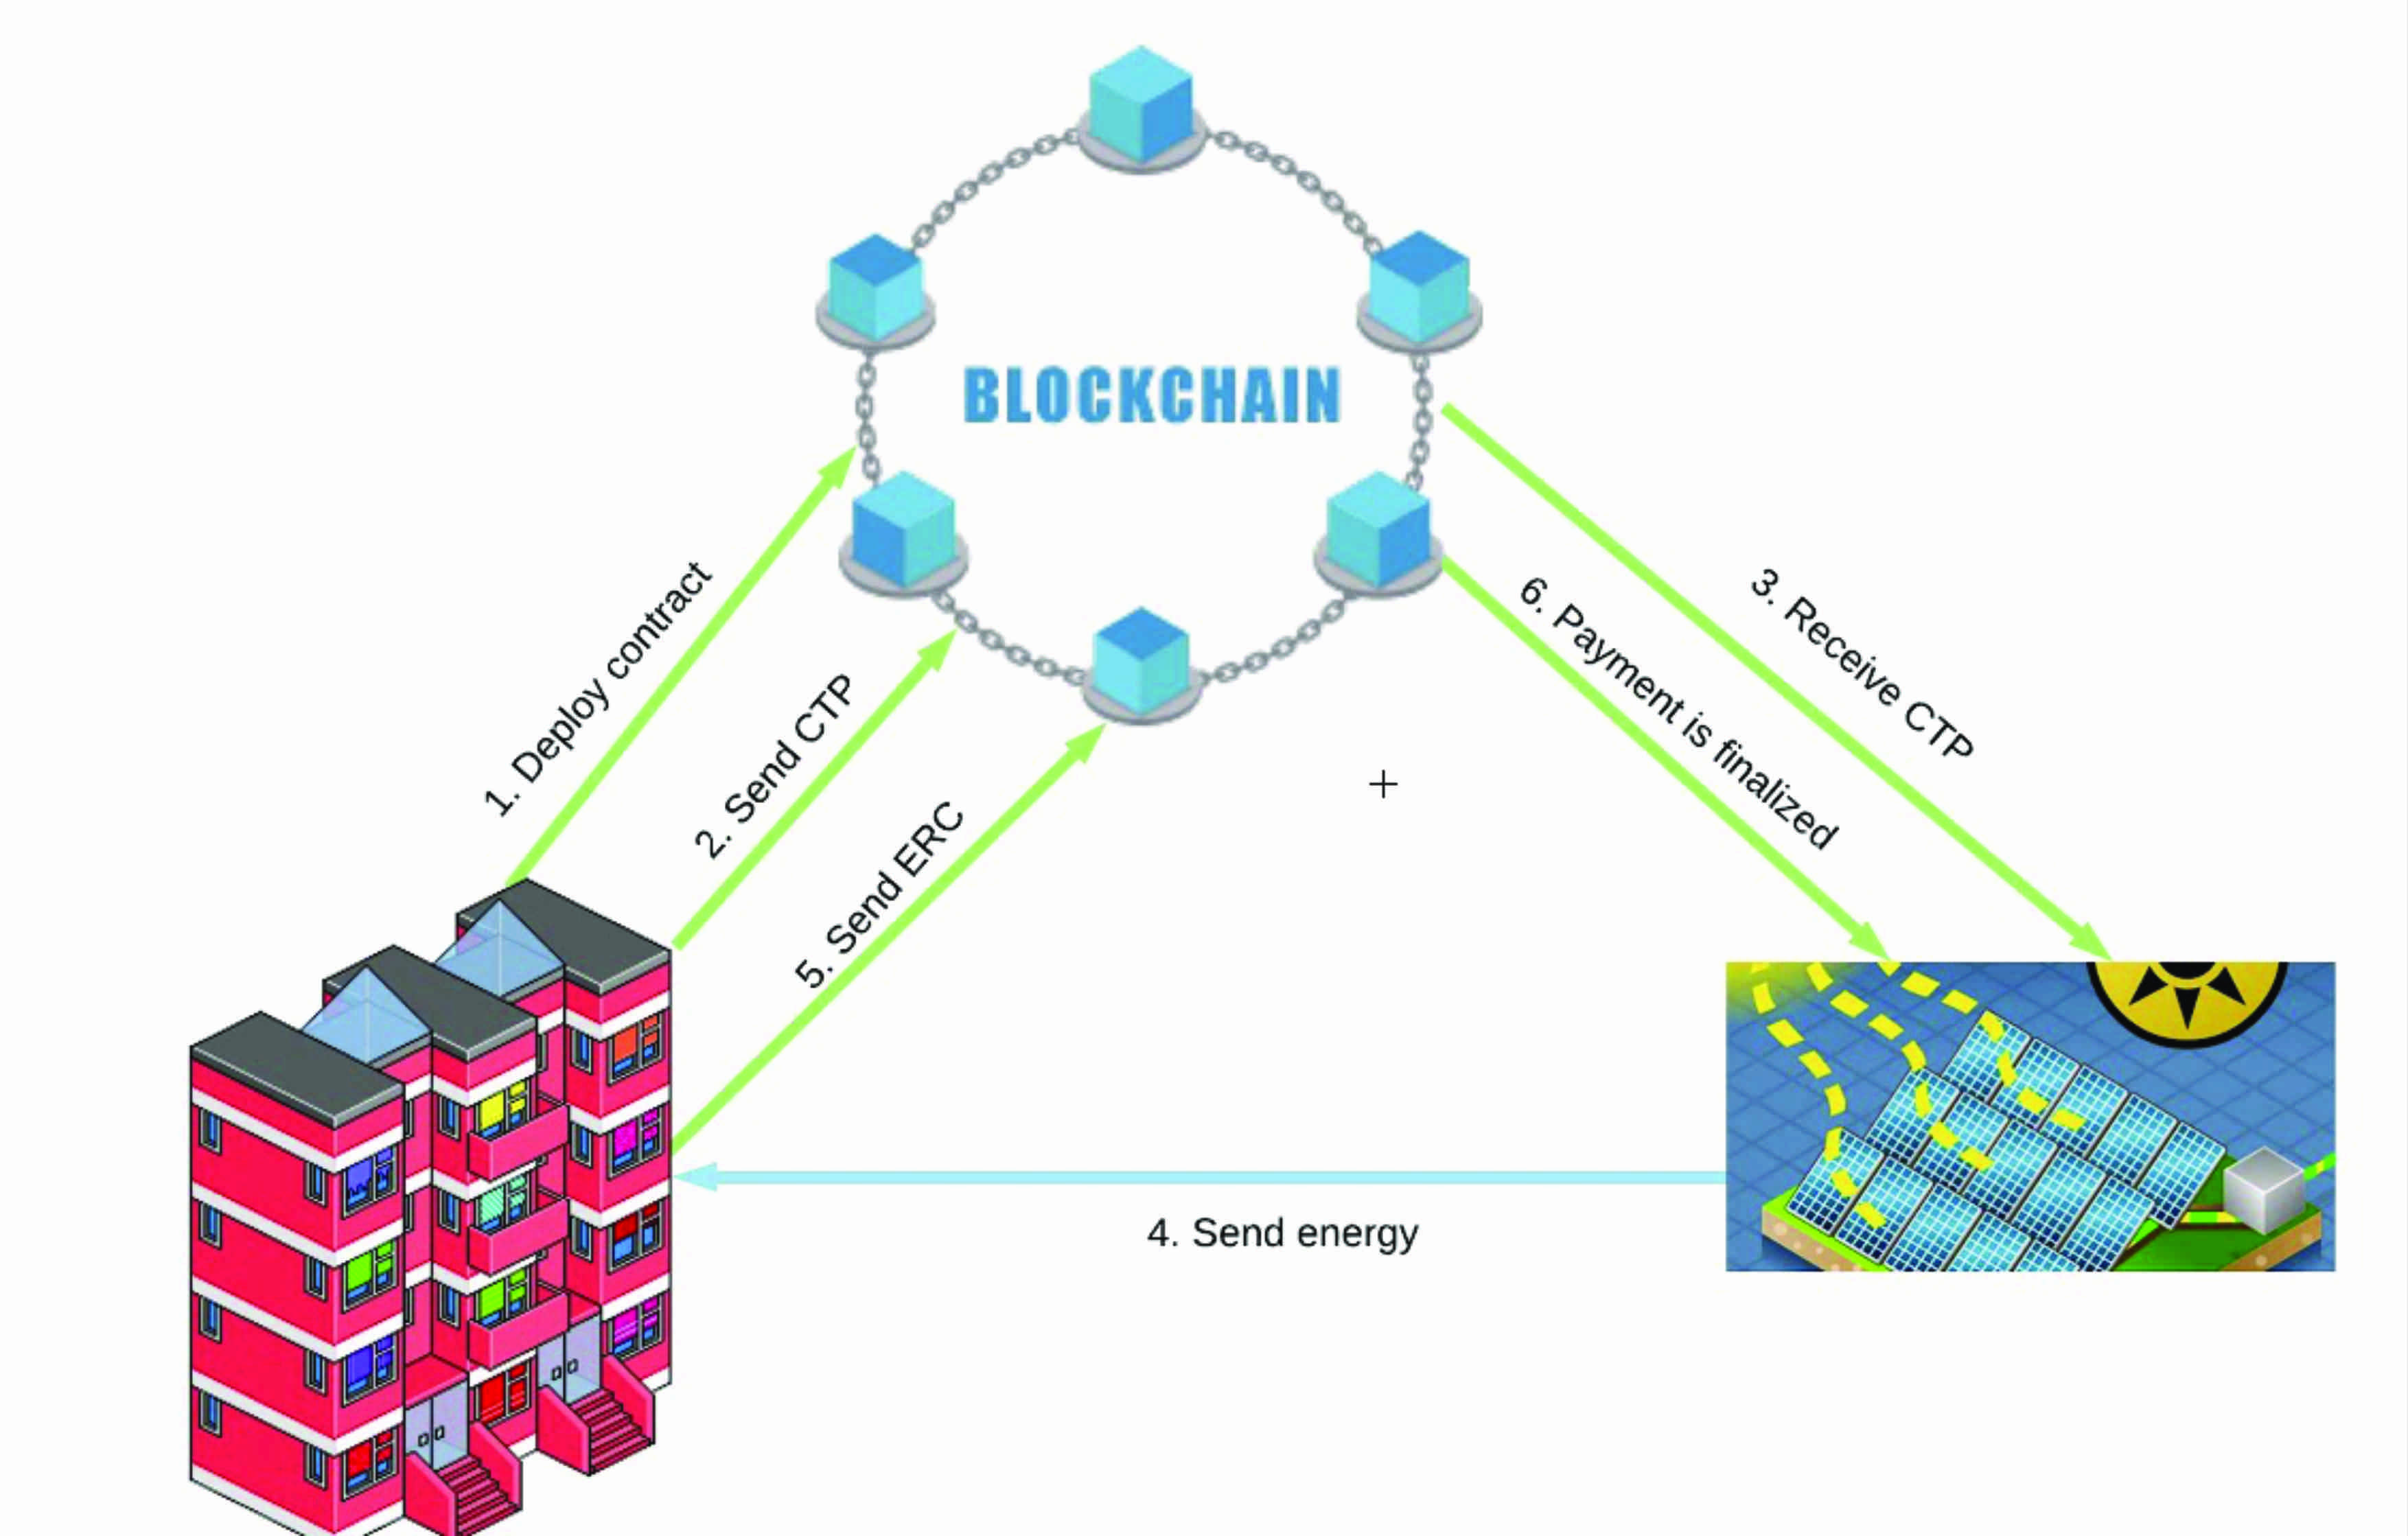 Bohemia Blockchain Energy